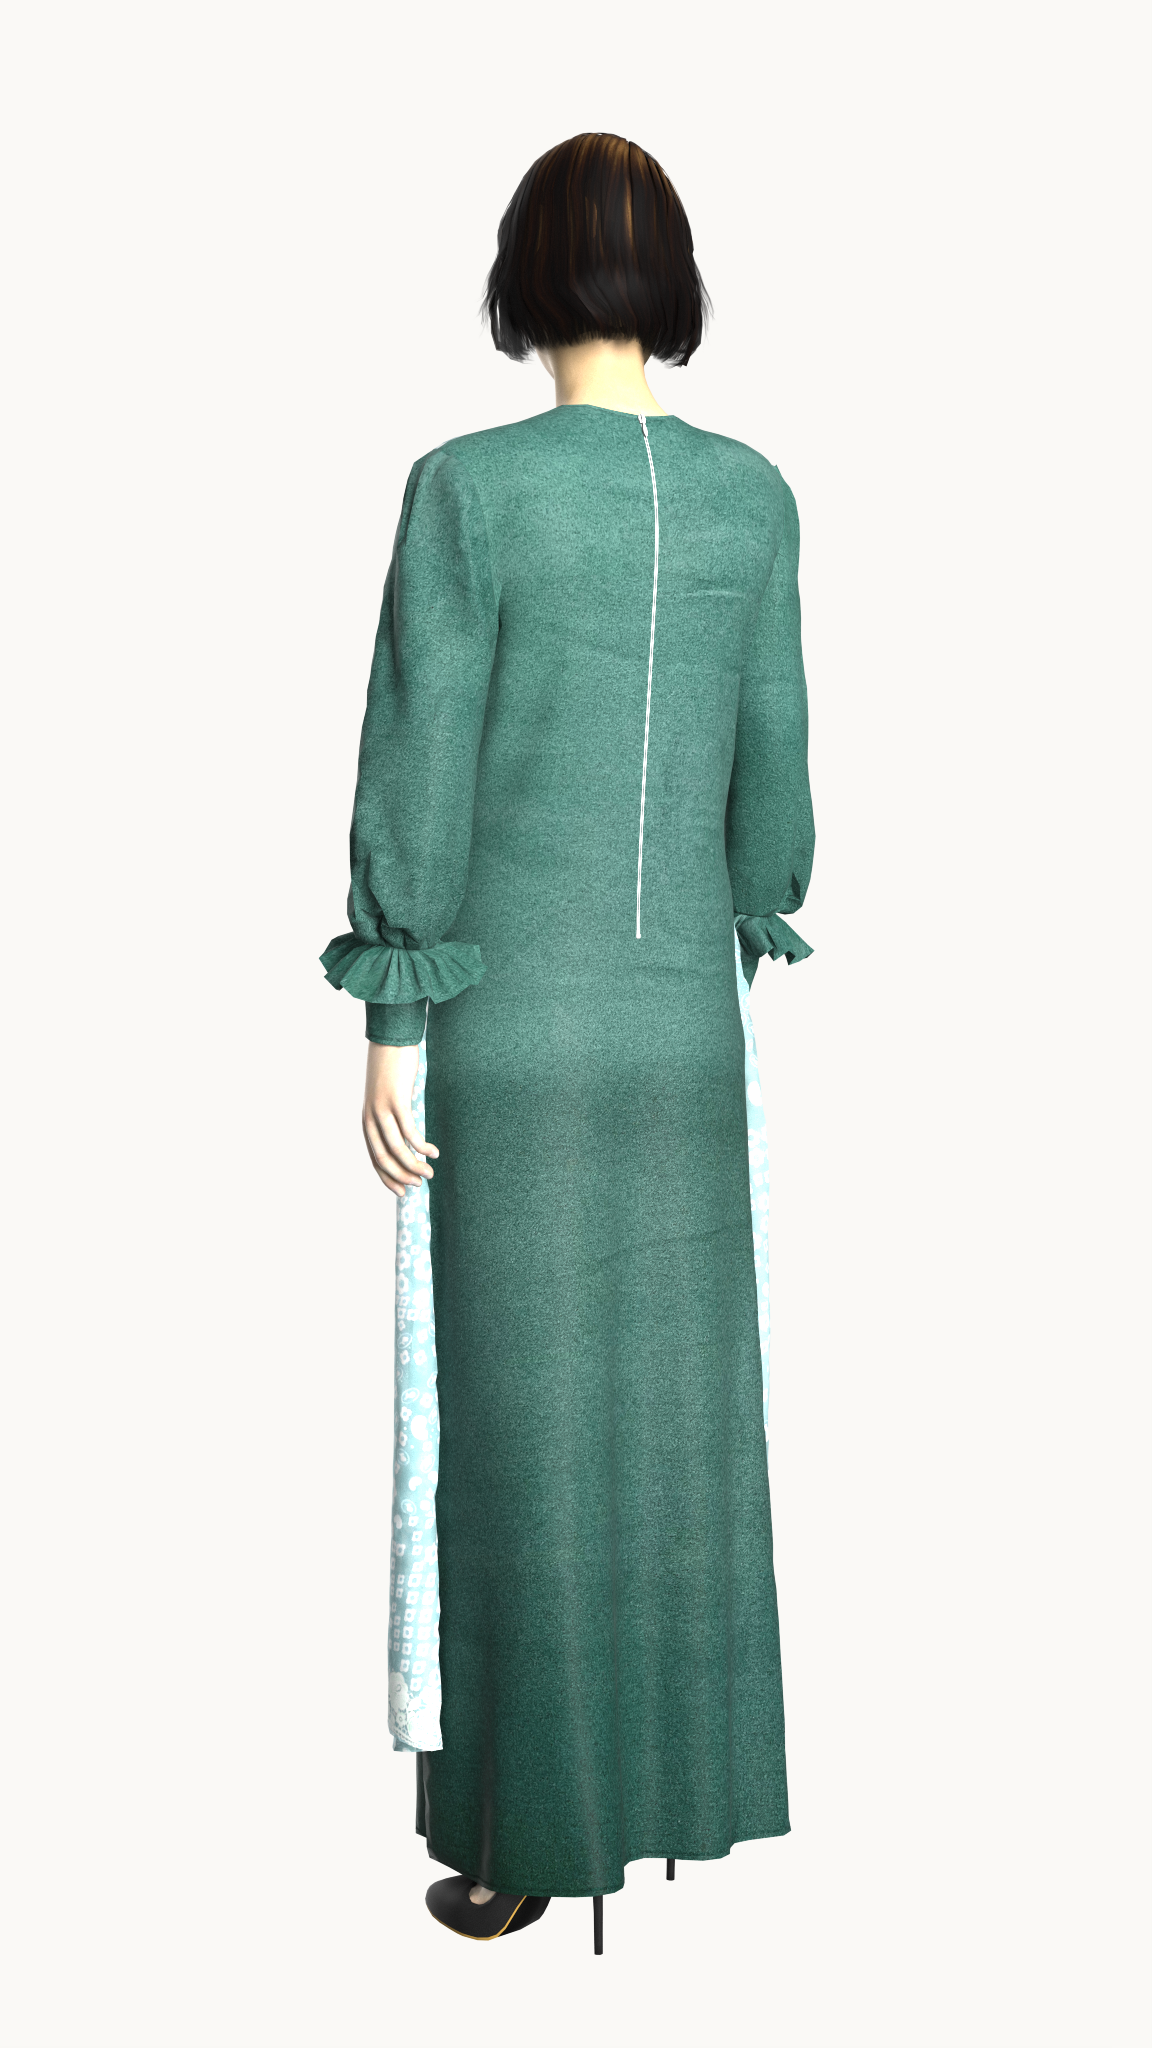 Coat style layered lace dress (Deep sea green)